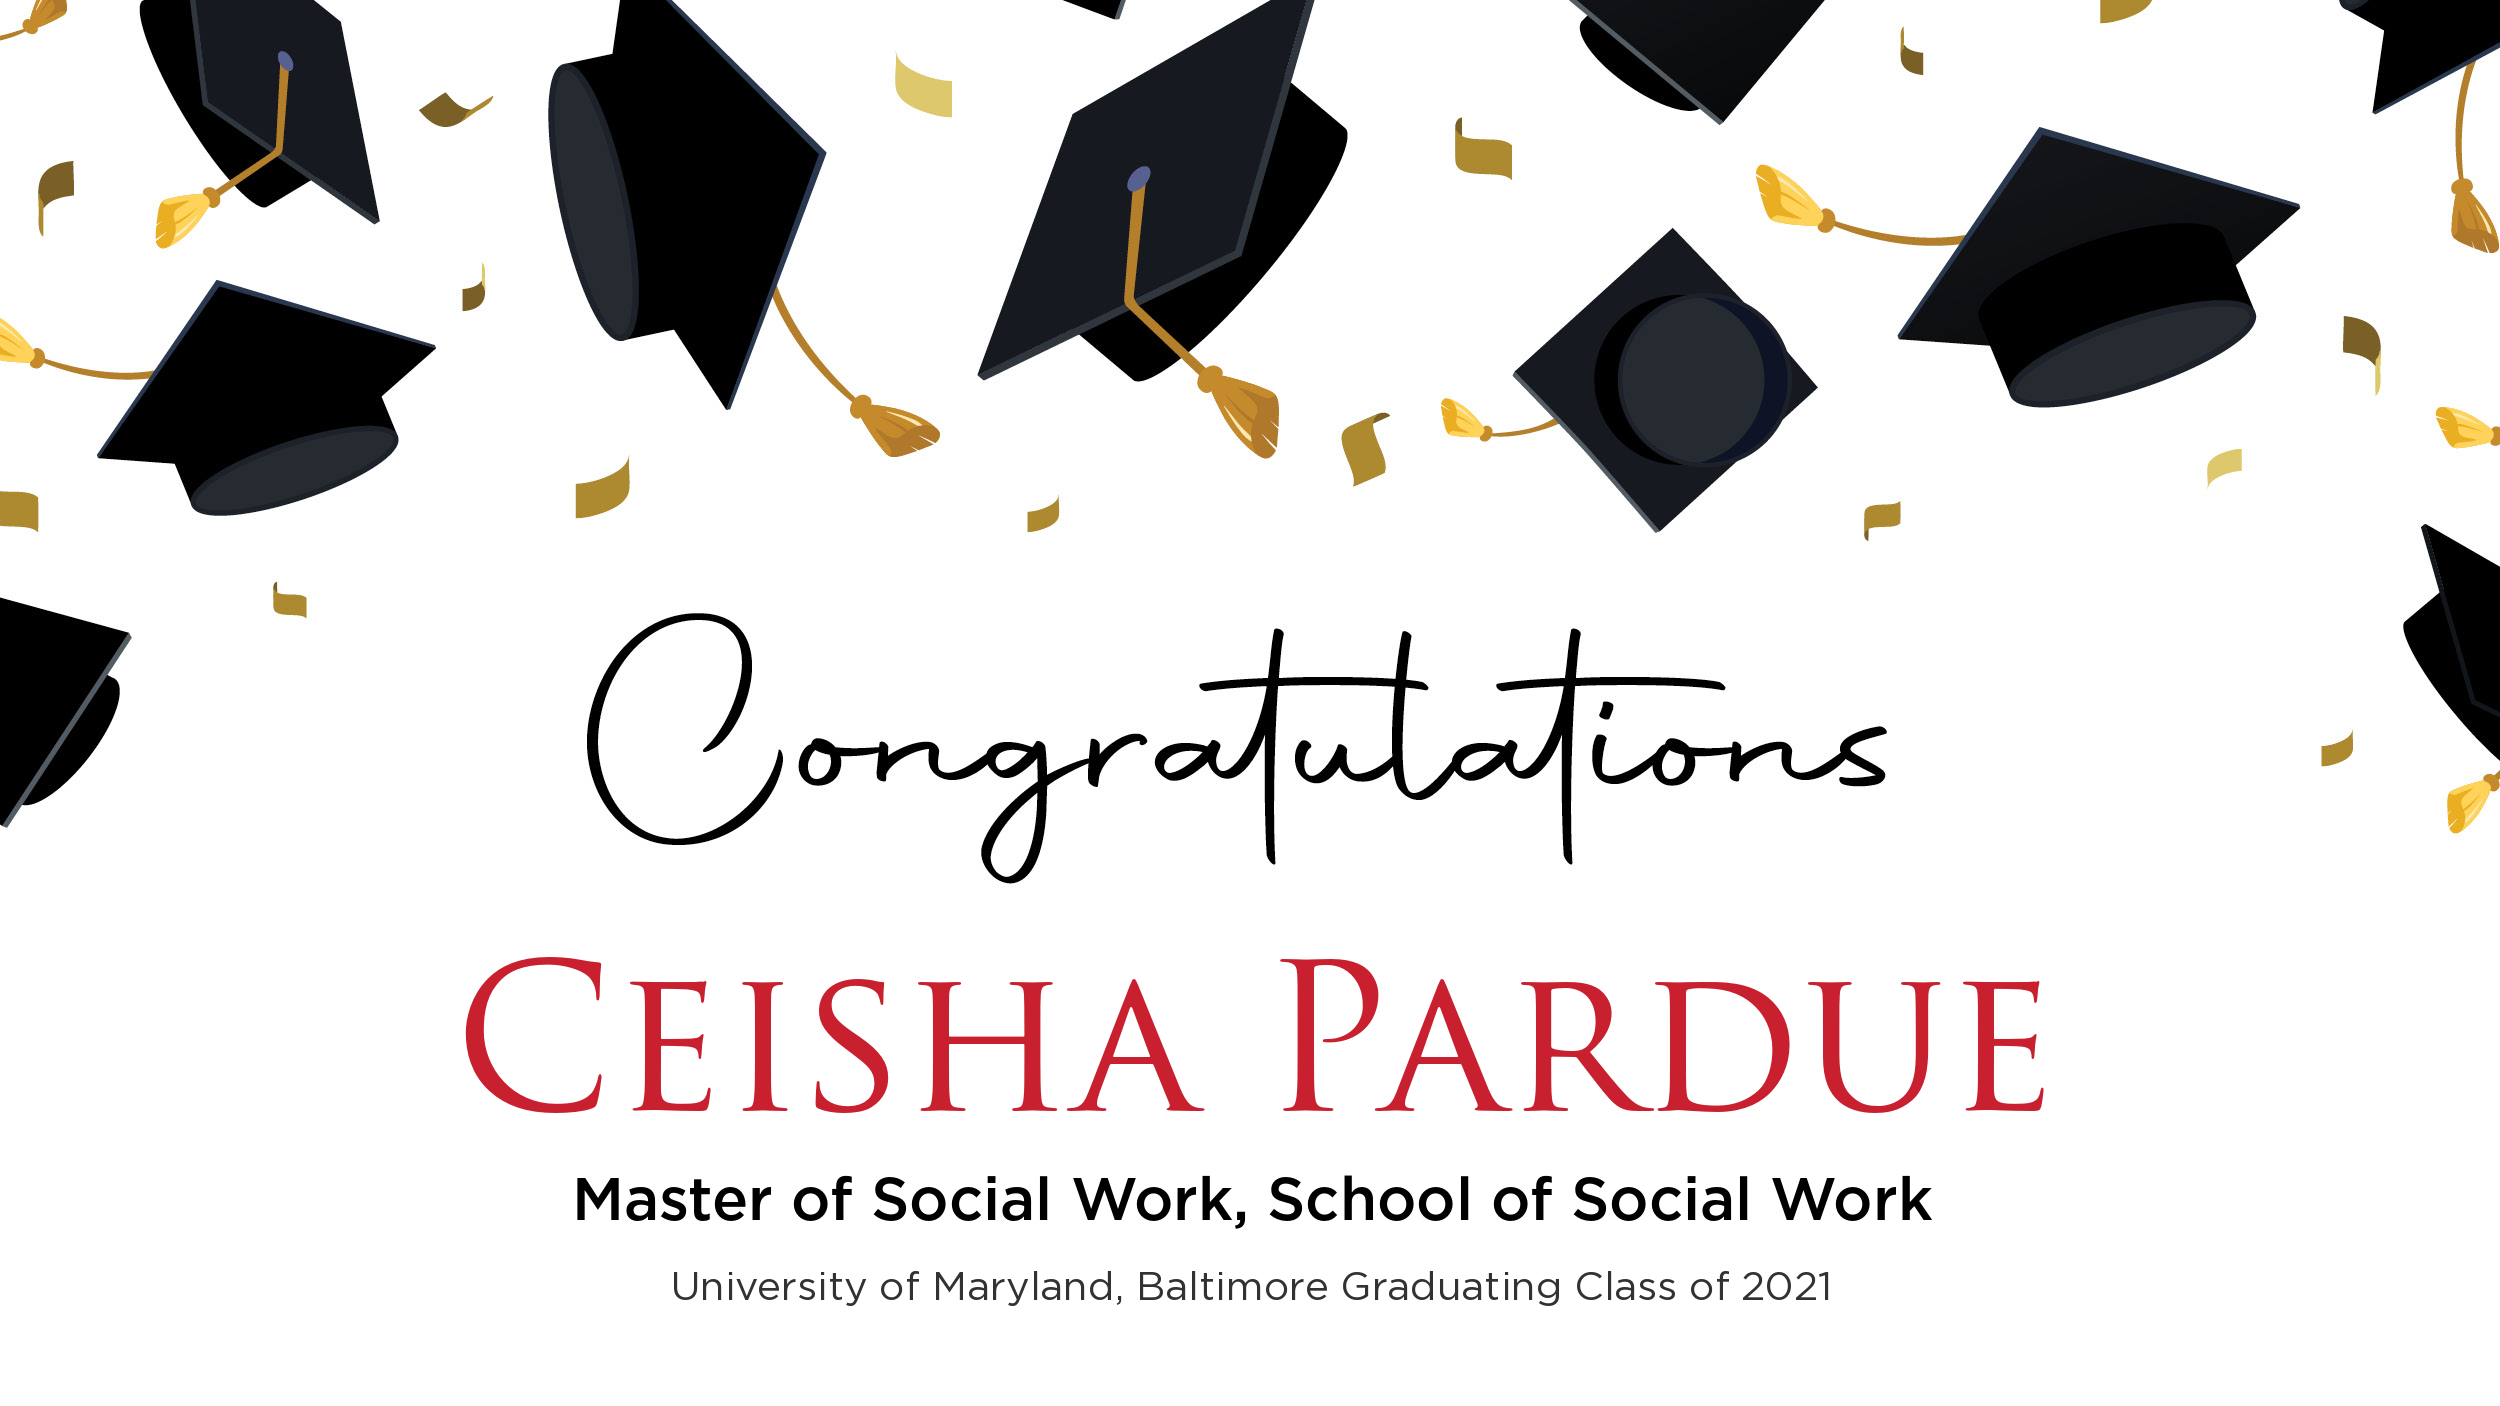 Congratulations Ceisha Pardue, Master of Social Work